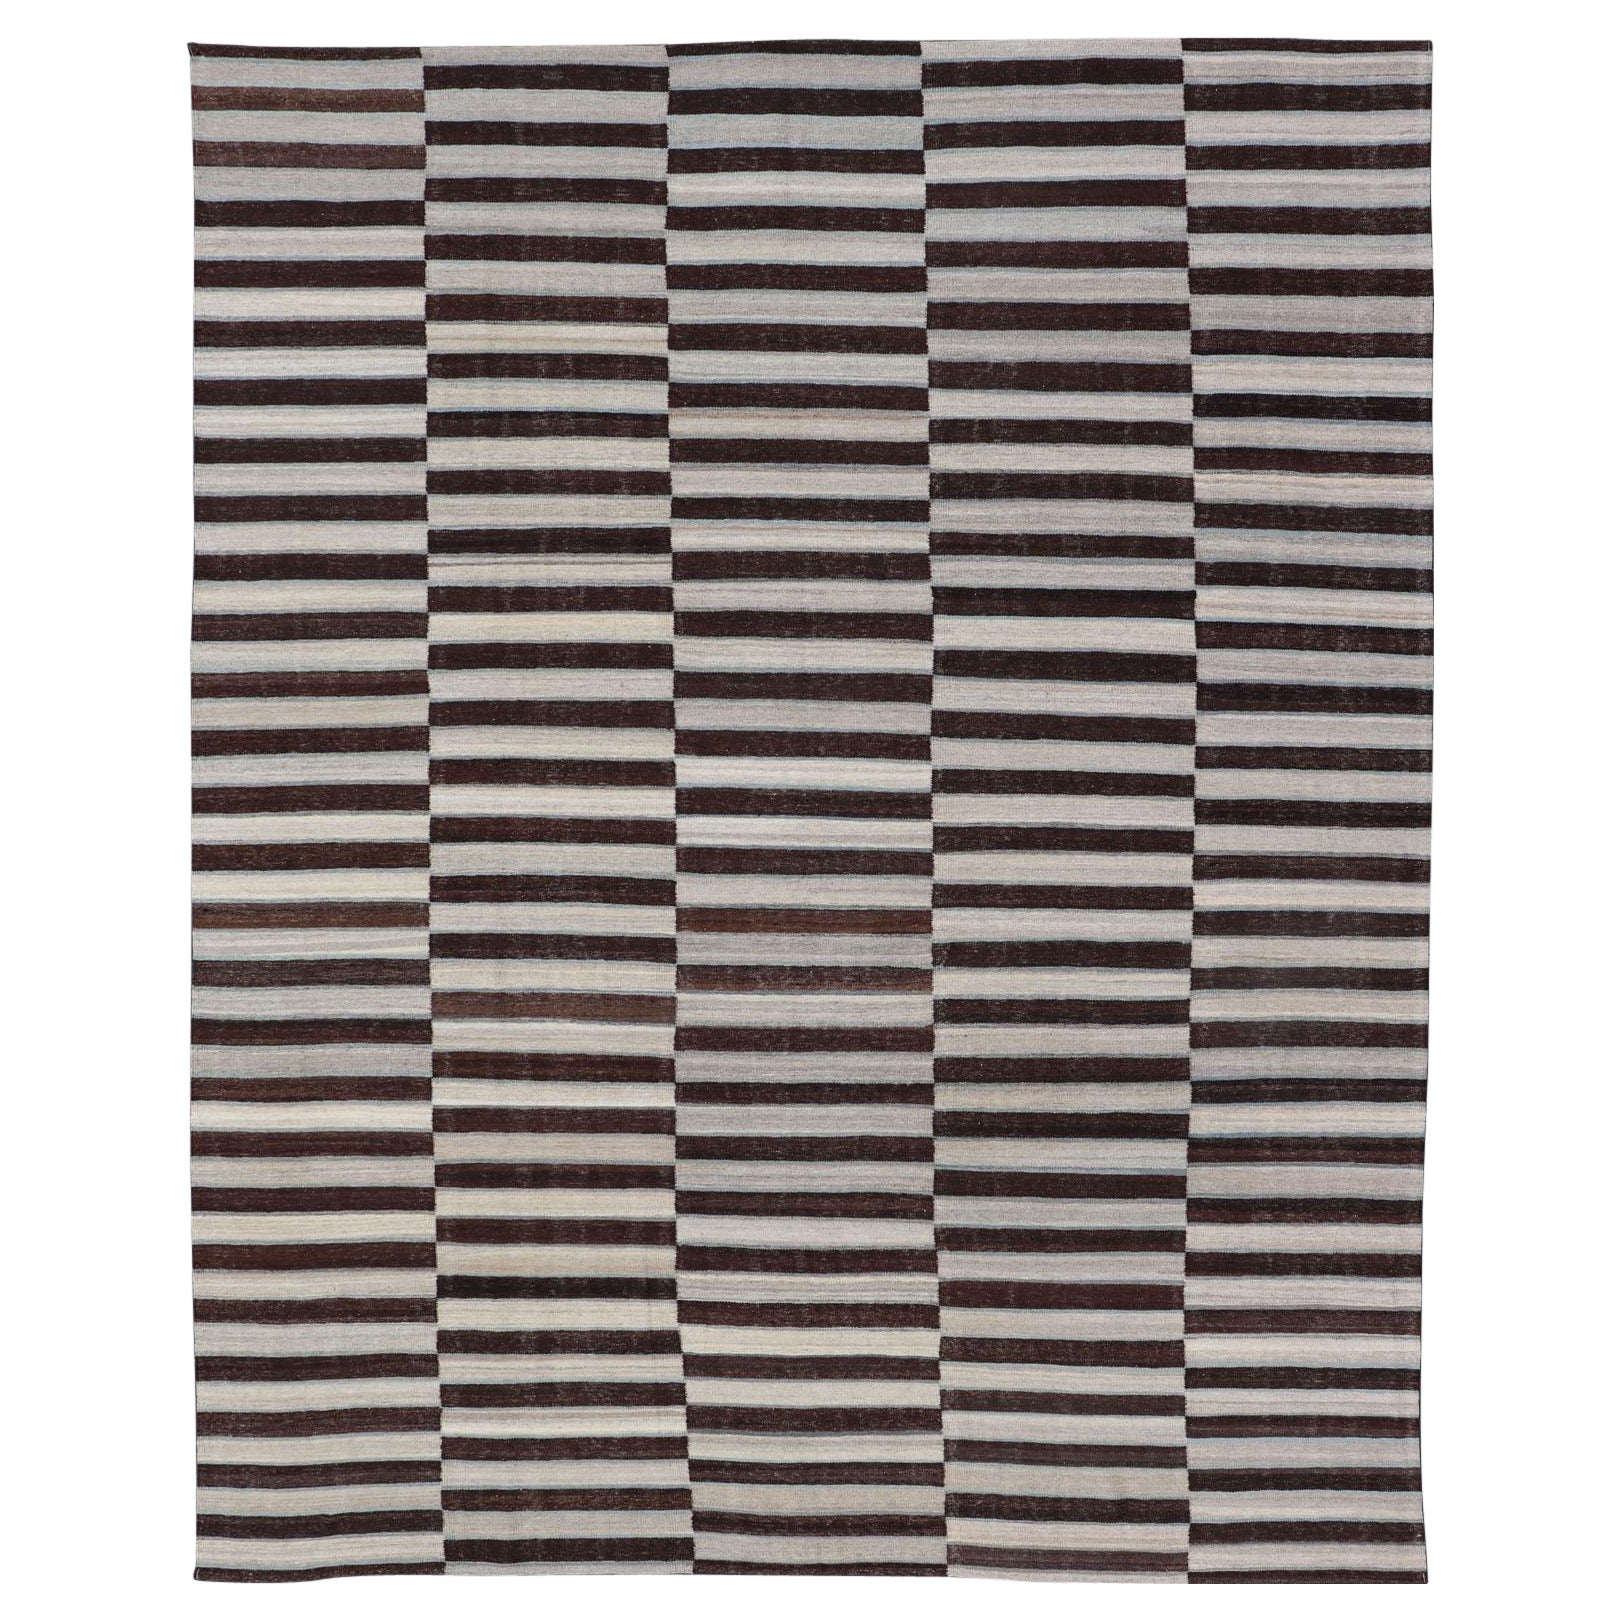 Modern Kilim Rug in Multi-Panel Striped Design with Chocolate Brown, cream 